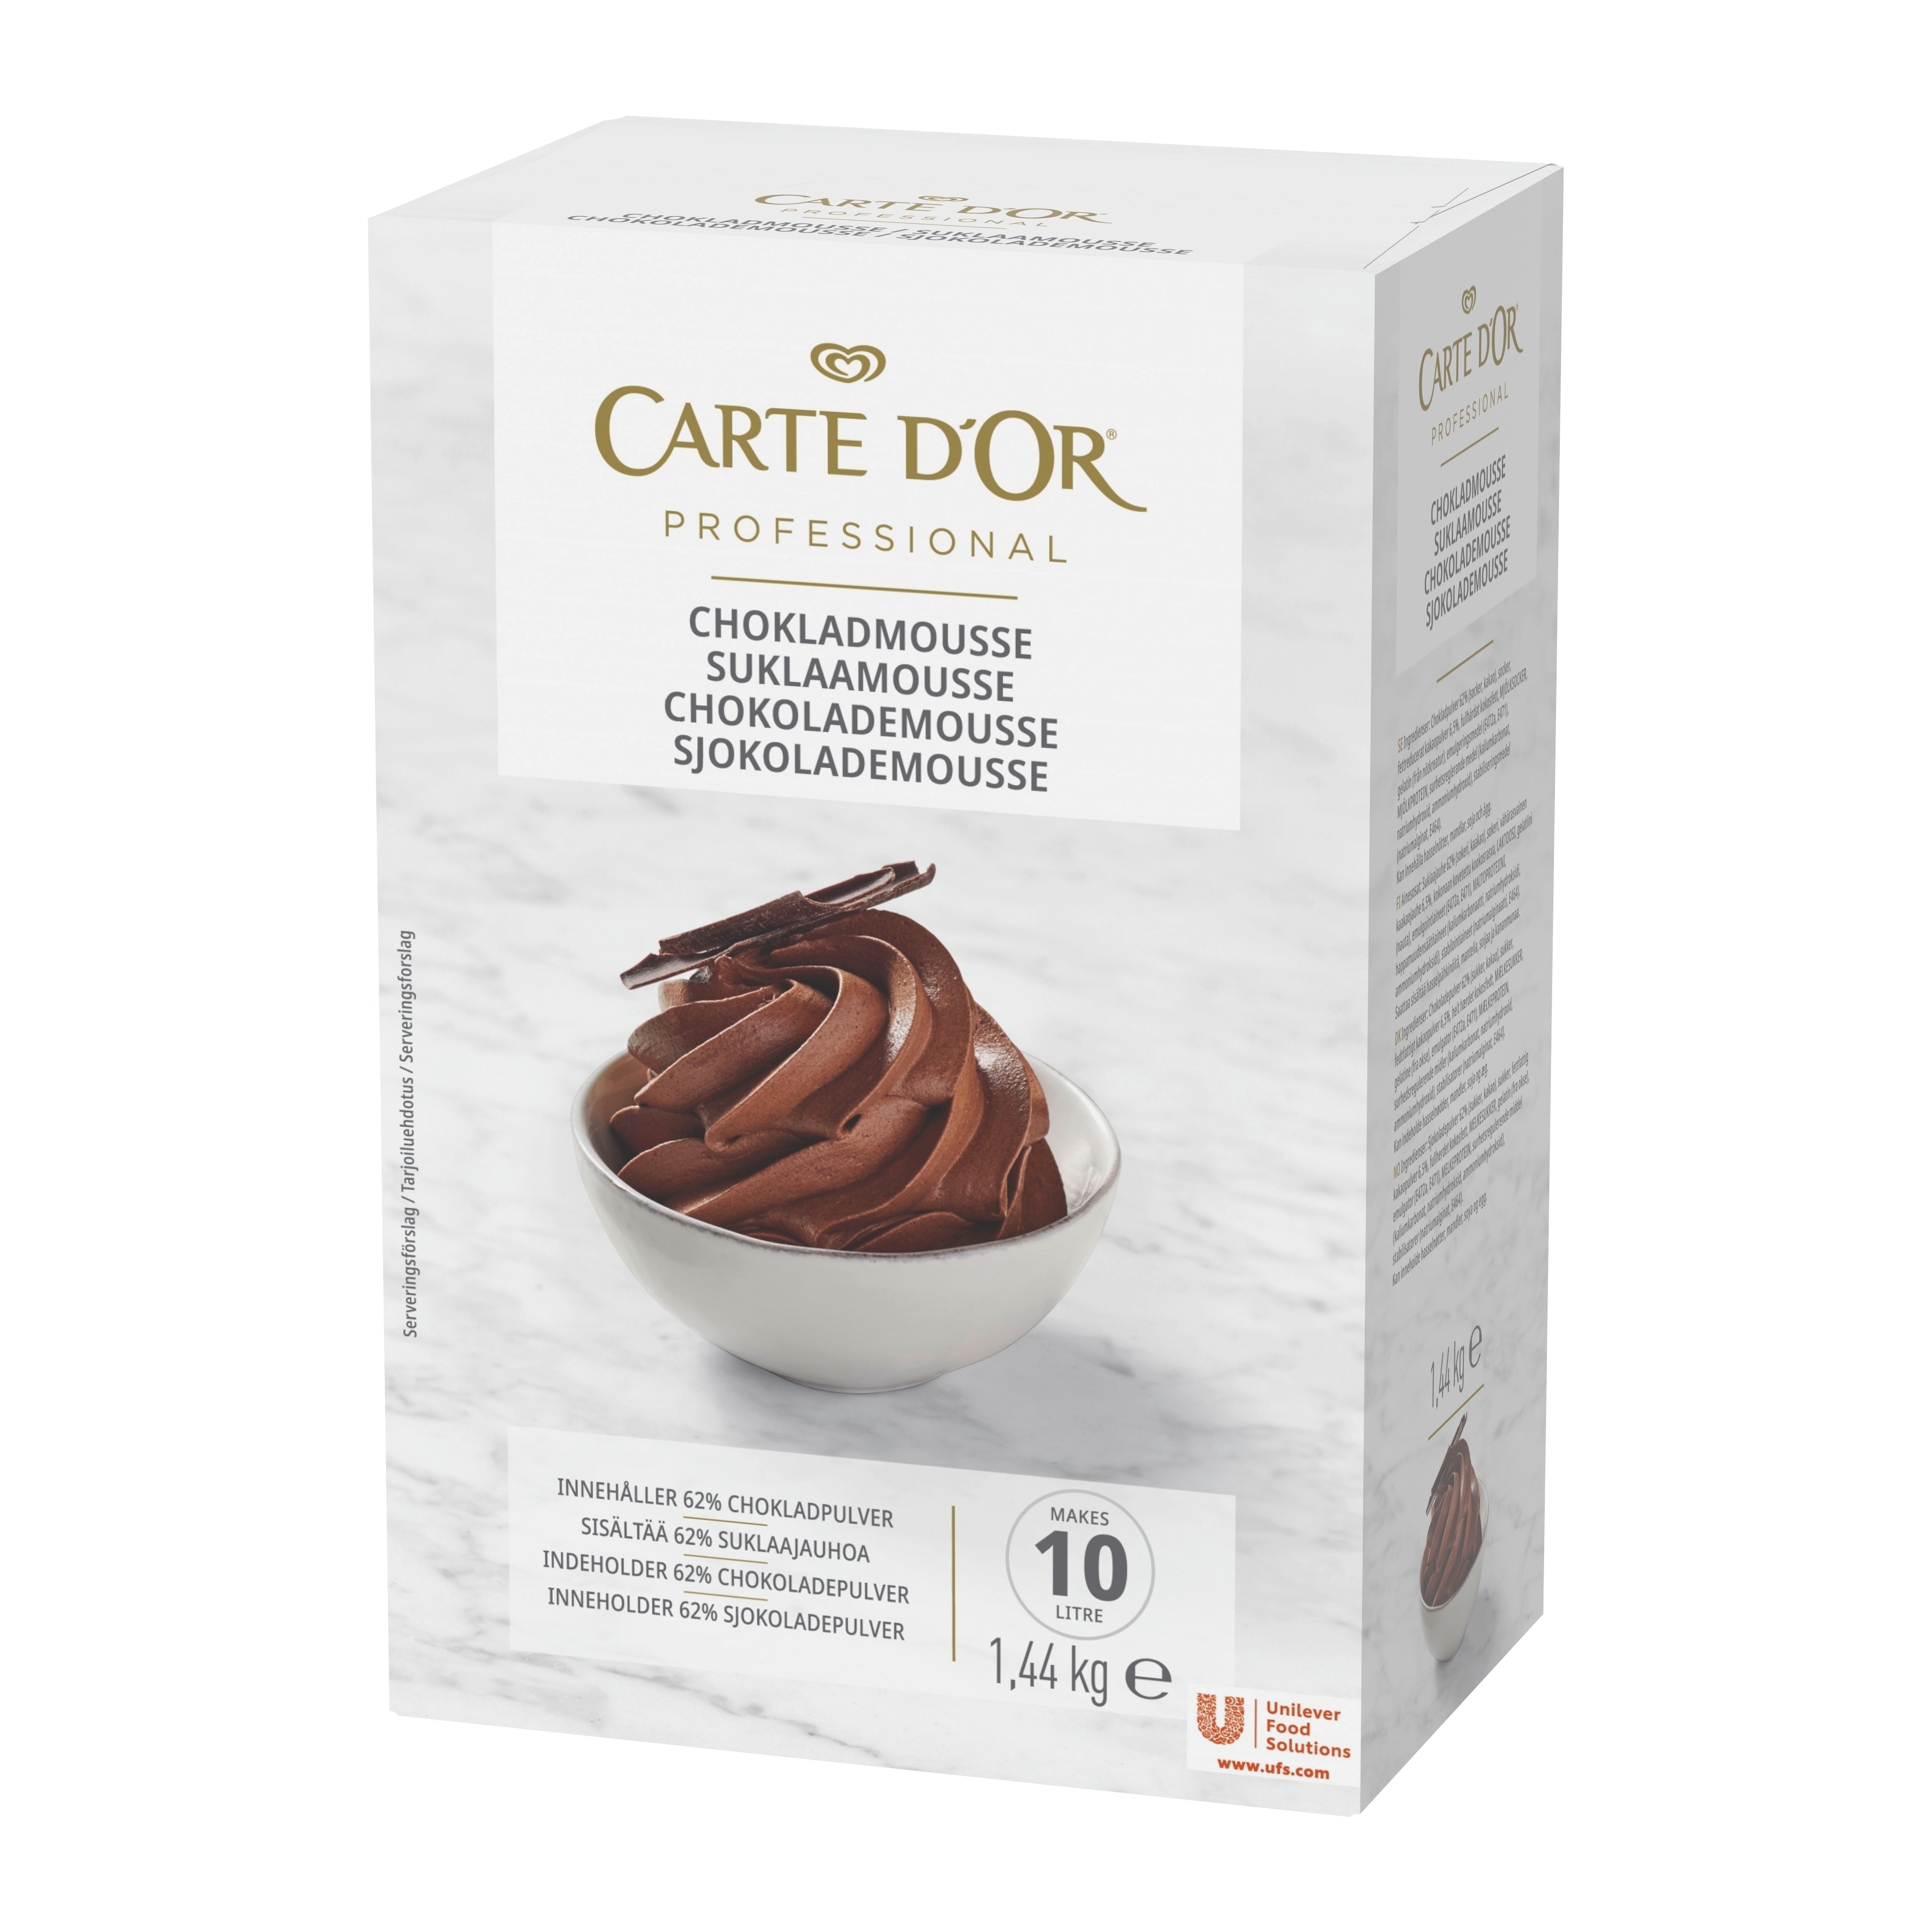 CARTE D'OR Chokladmousse 1 x 1,44 kg - 